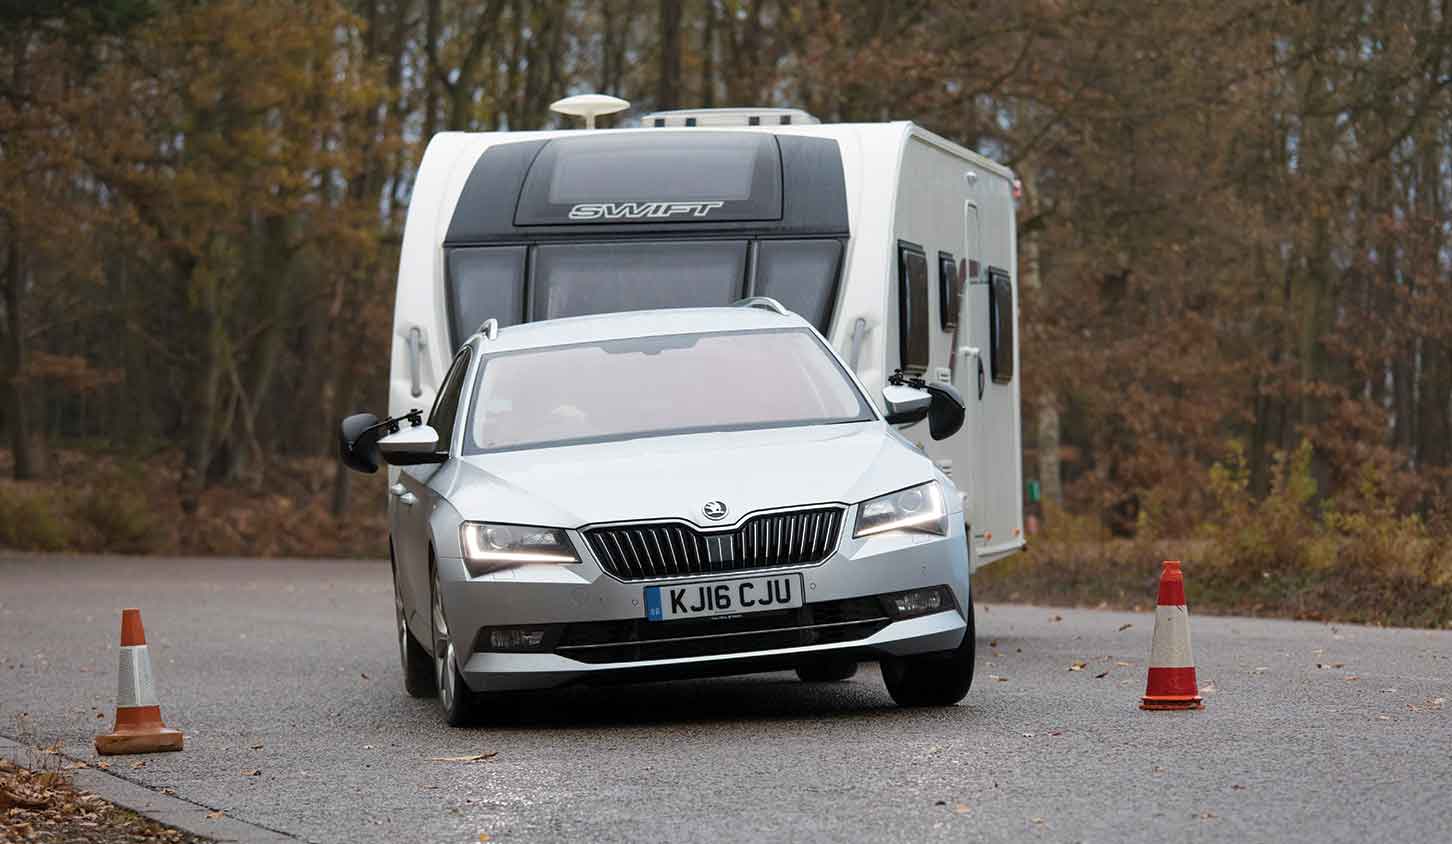 A silver 2016 Skoda Superb towing family caravan on a towing agility course